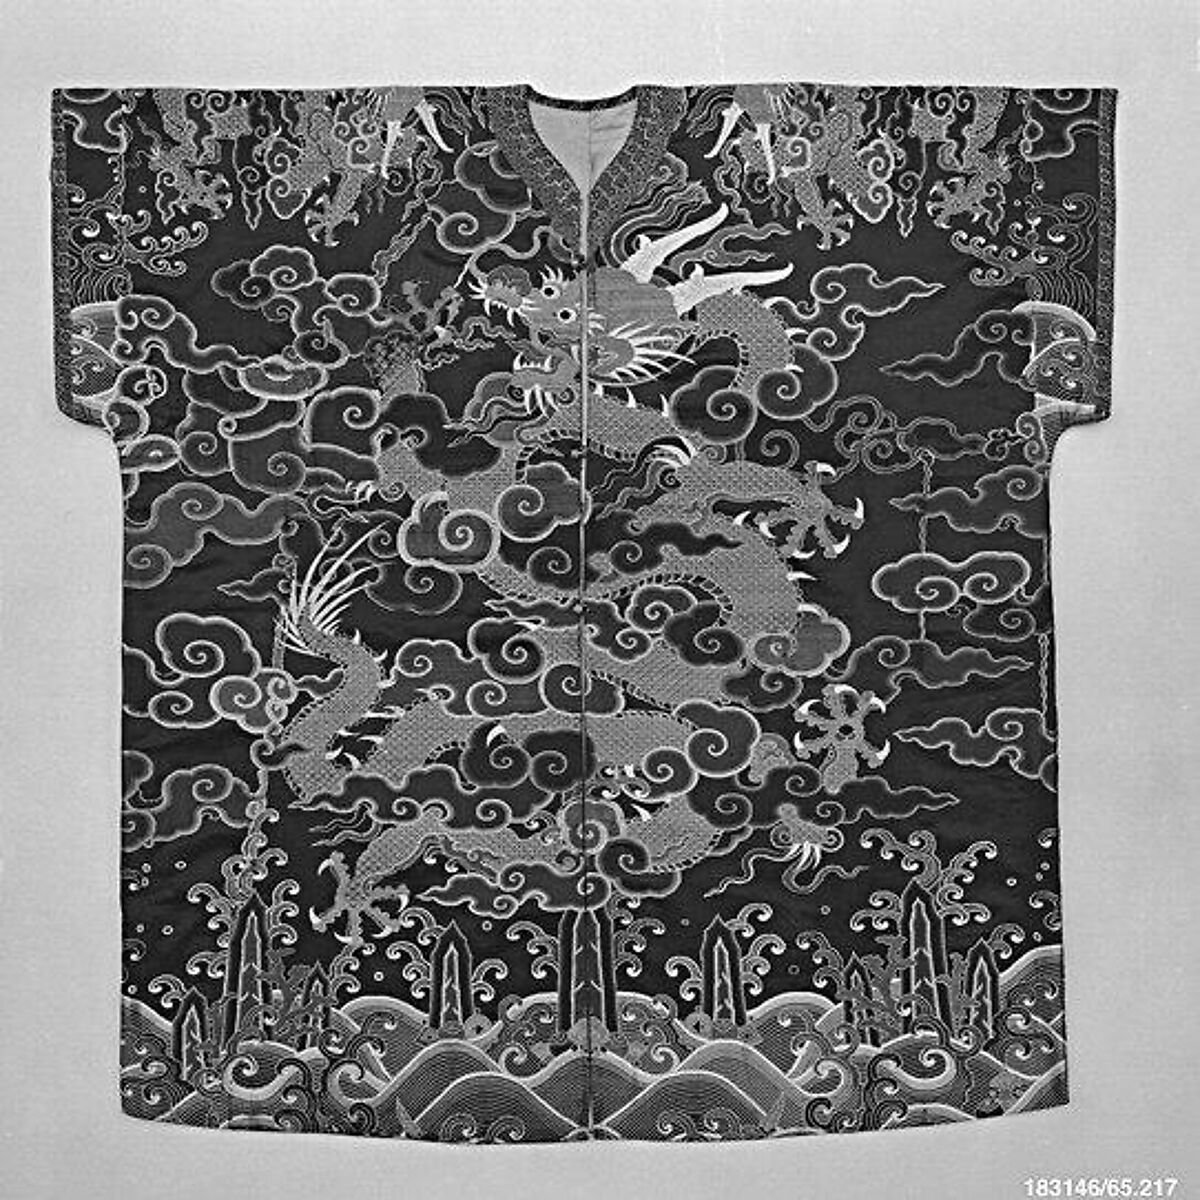 Daoist Priest's or Woman's Overrobe, Silk, satin, metallic threads, China 